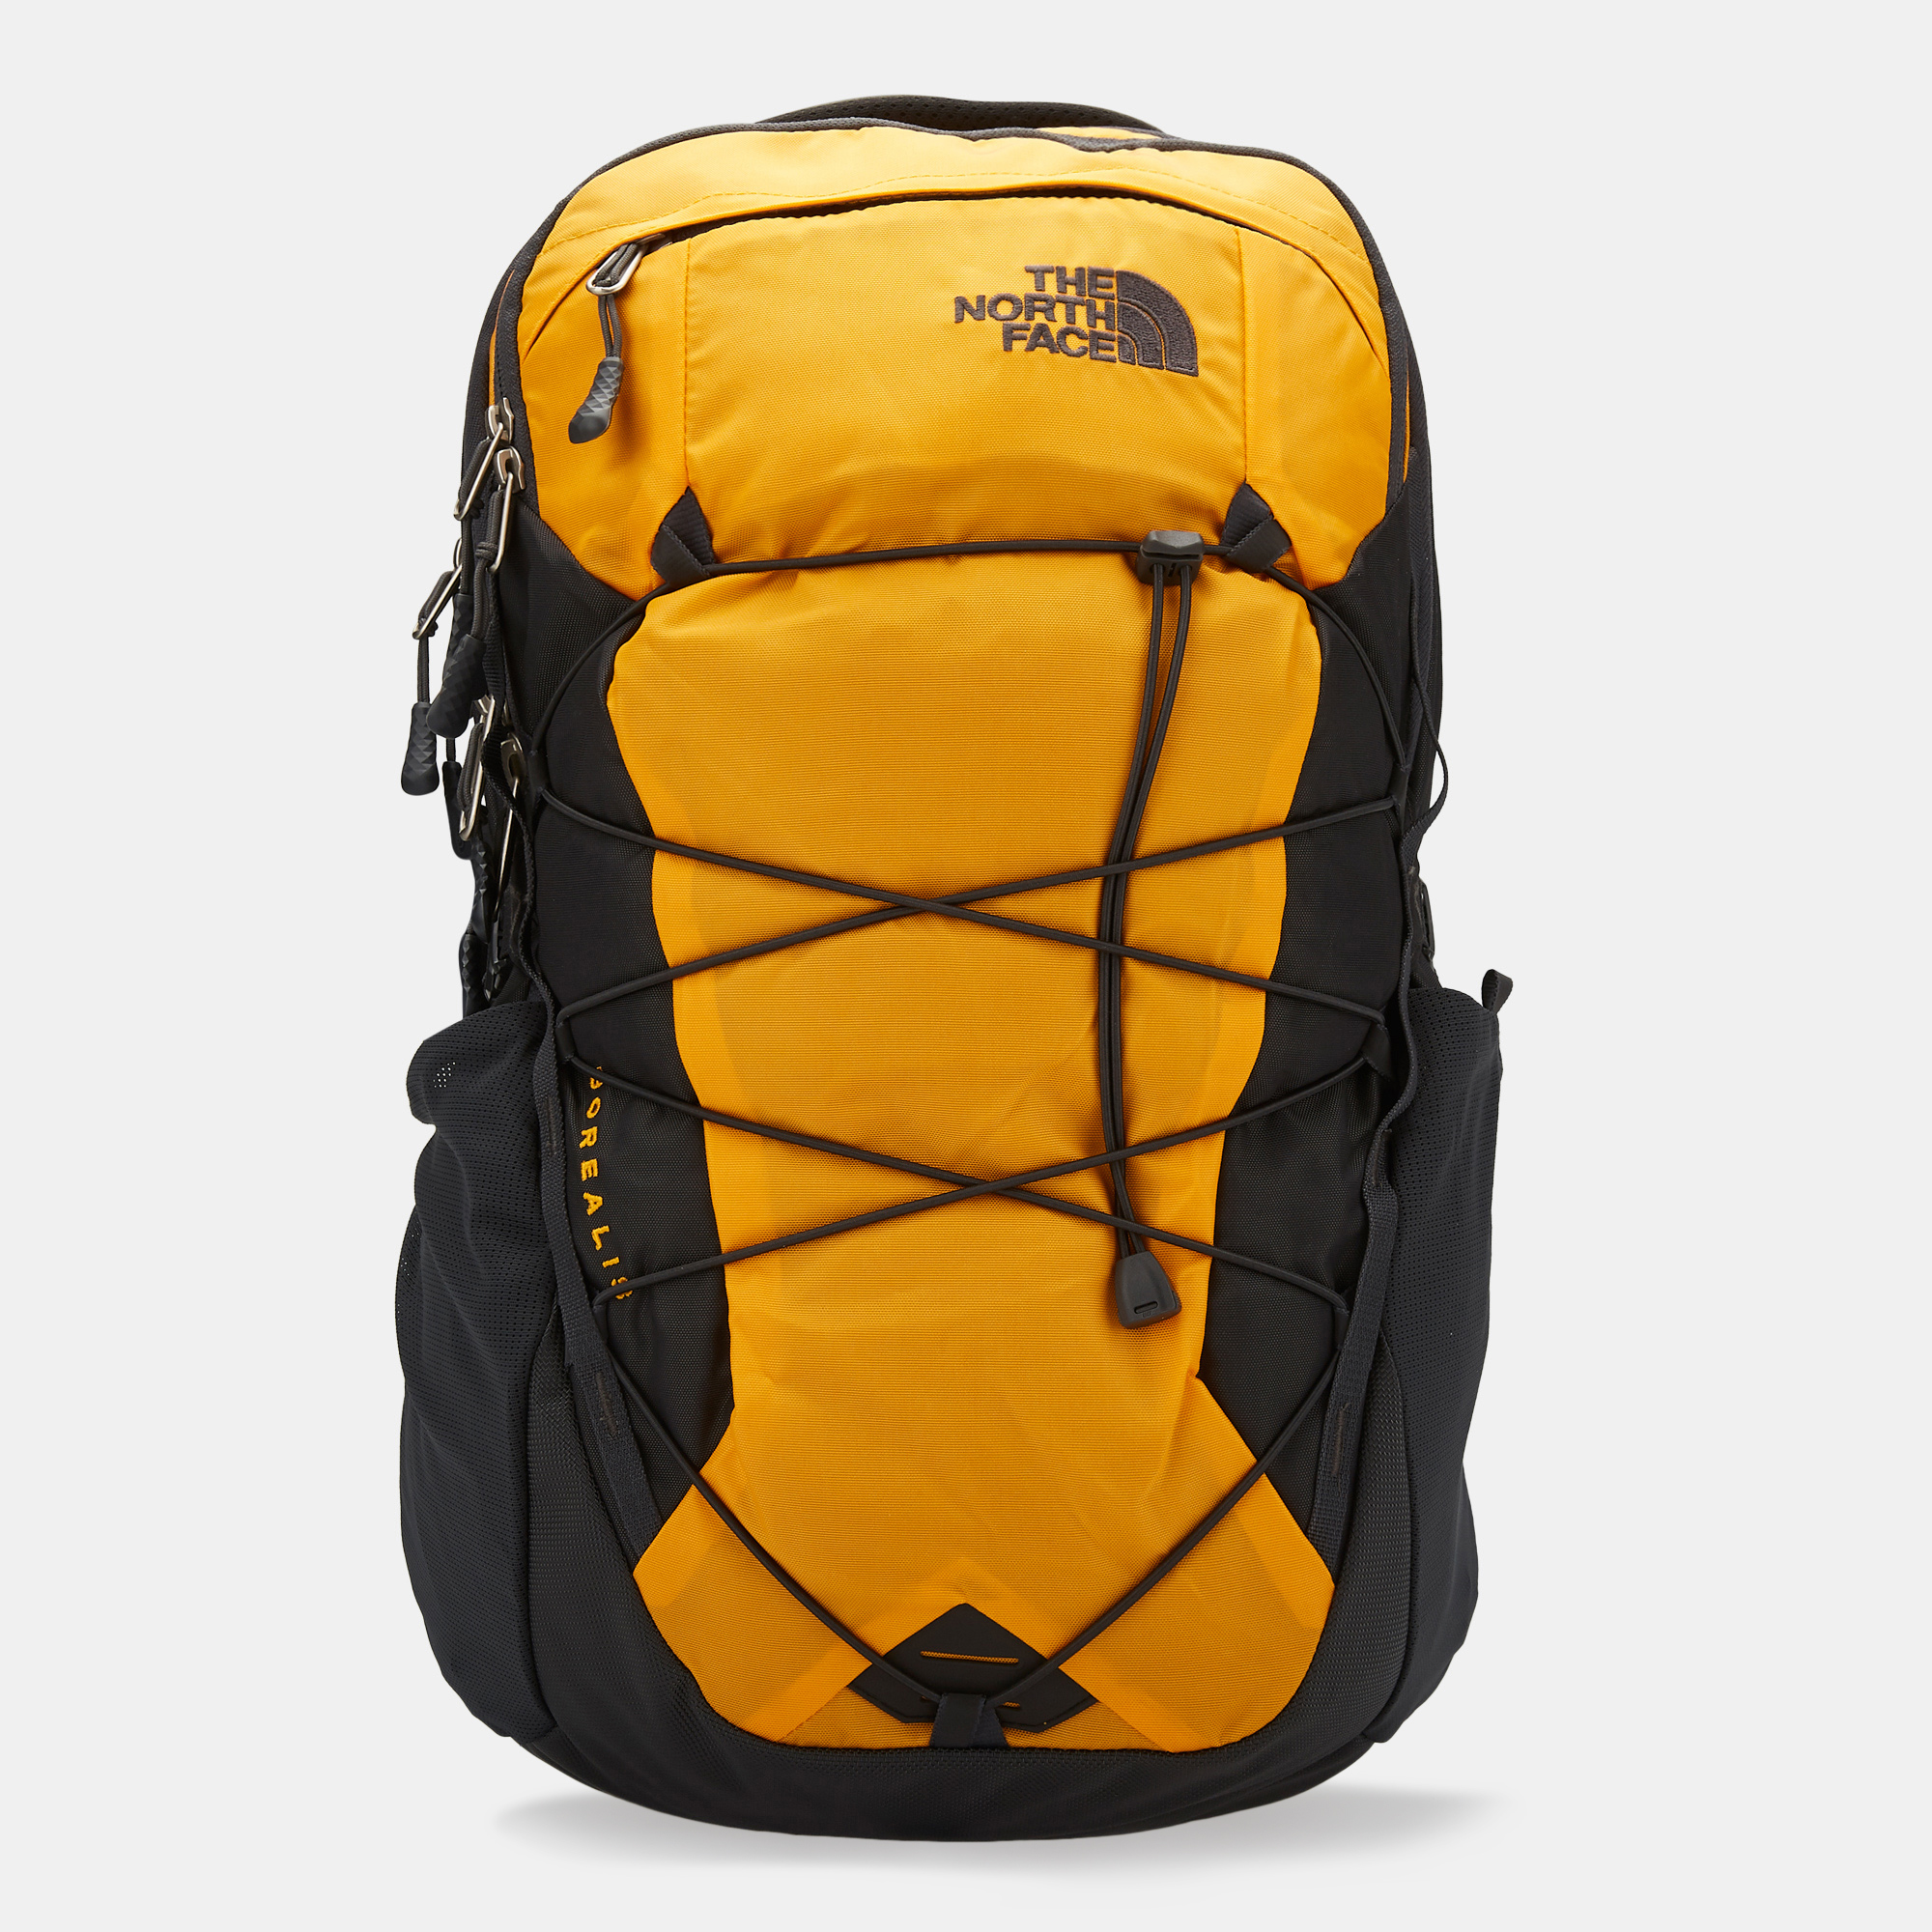 Buy The North Face Borealis Backpack Online in Saudi Arabia | SSS